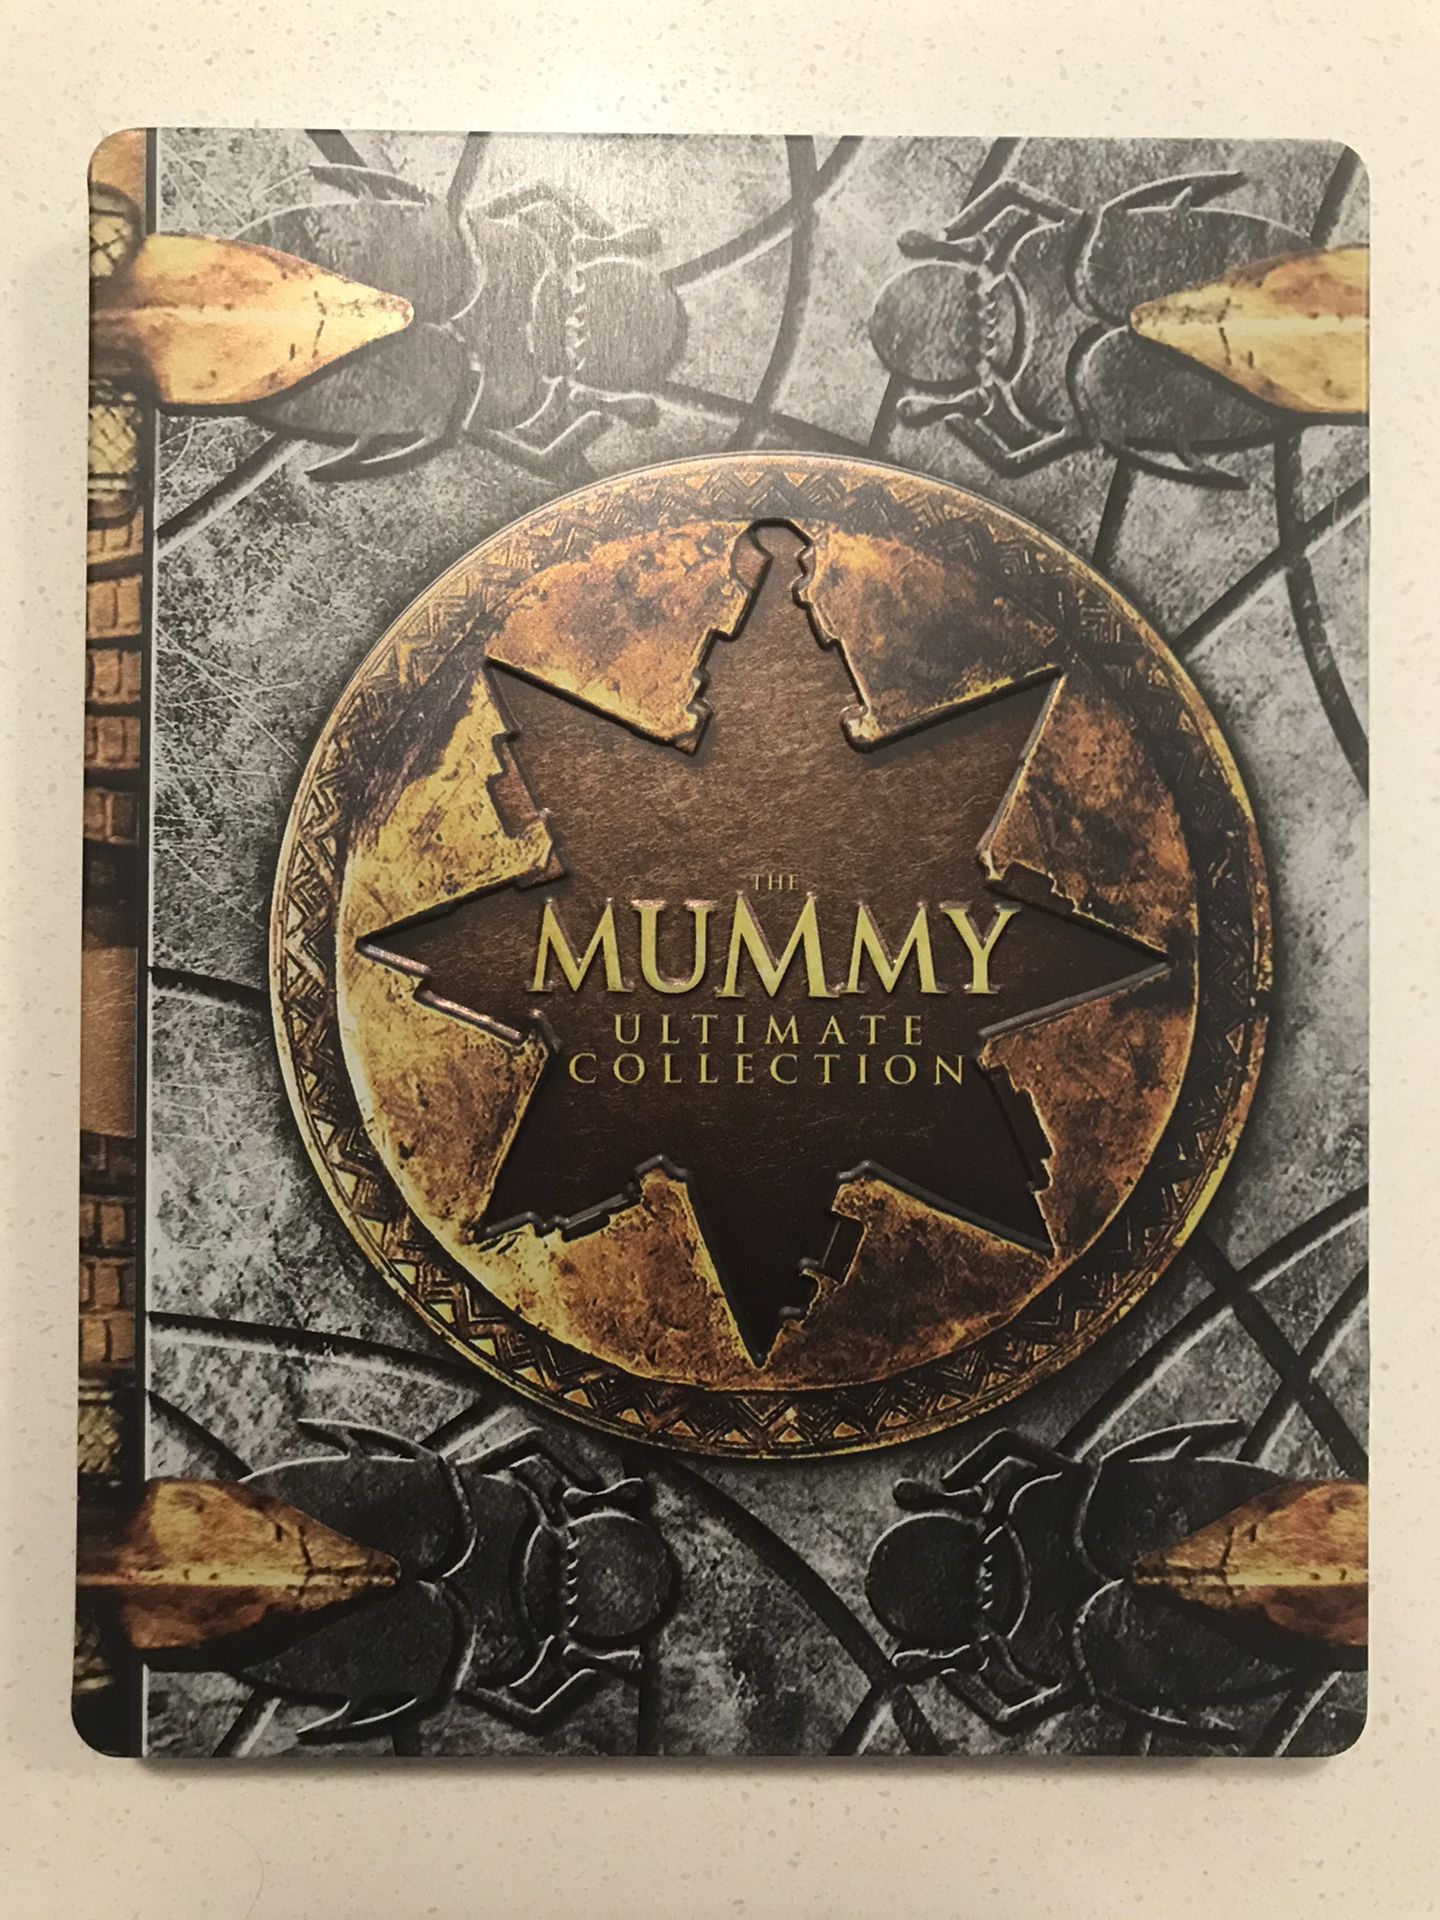 Mummy Ultimate collection Blu-ray steelbook